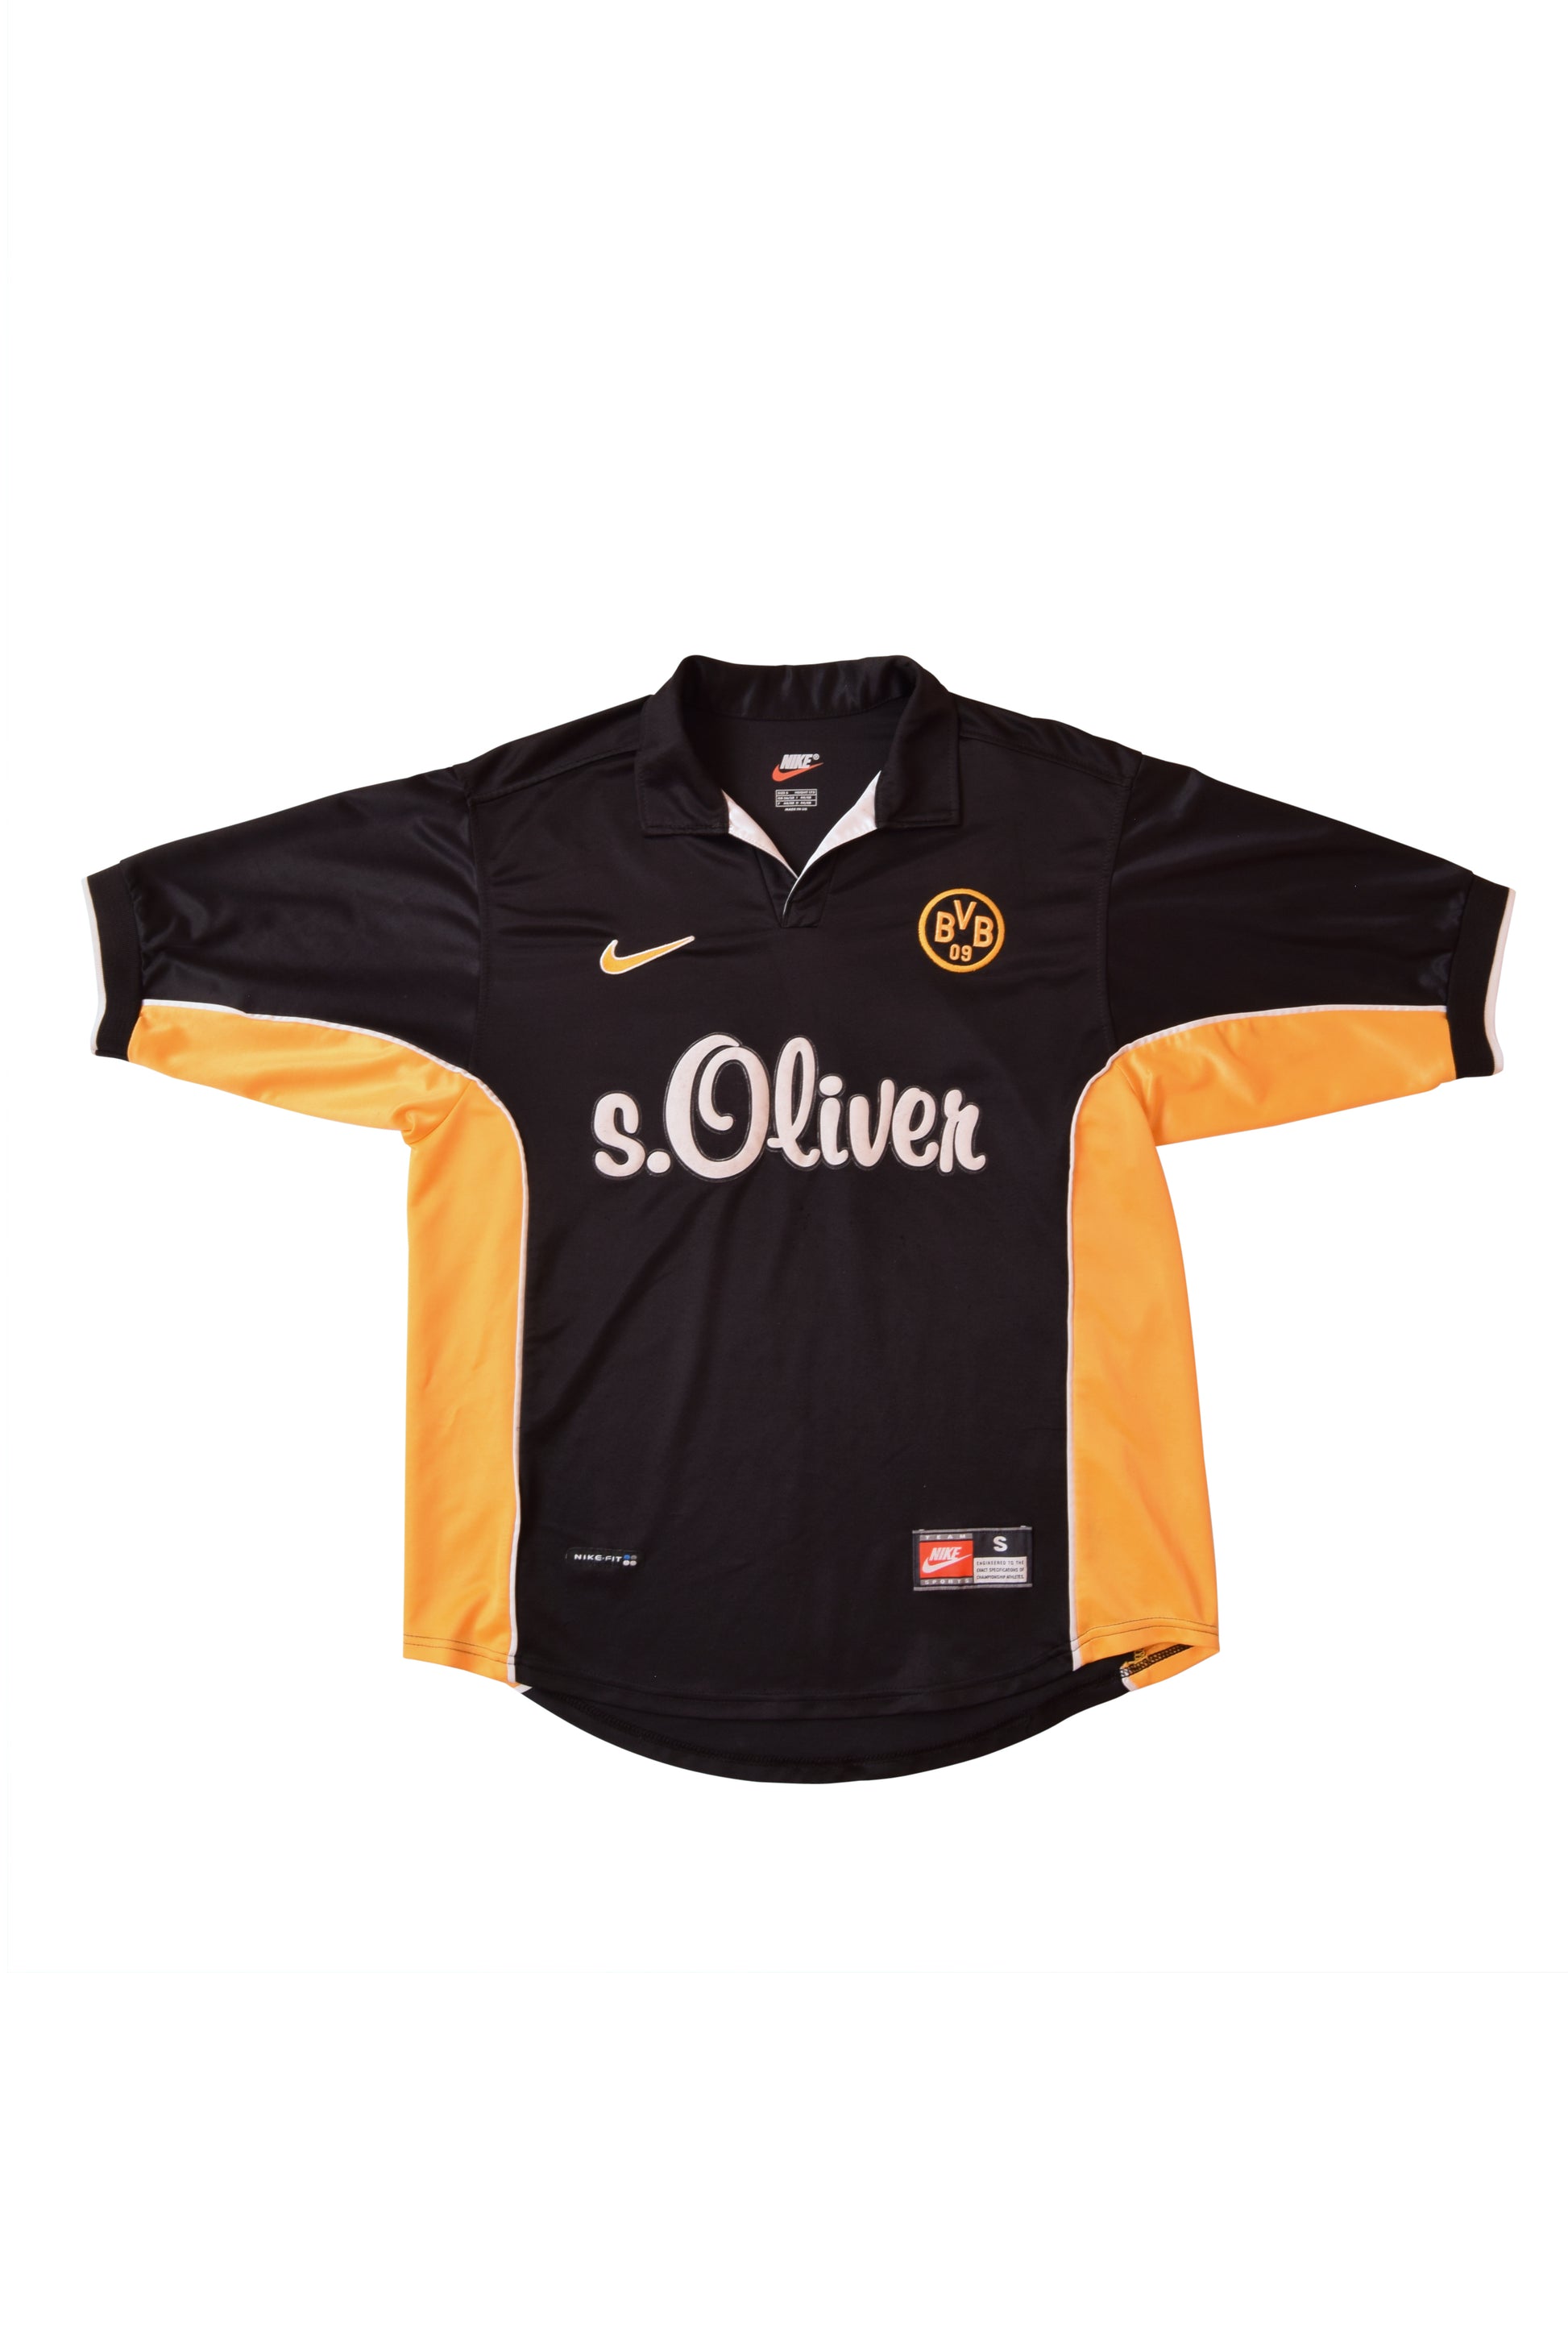 Vintage BVB Borussia Dortmund Nike Away Shirt 1998-2000 Size S-M Made in UK S. Oliver Black